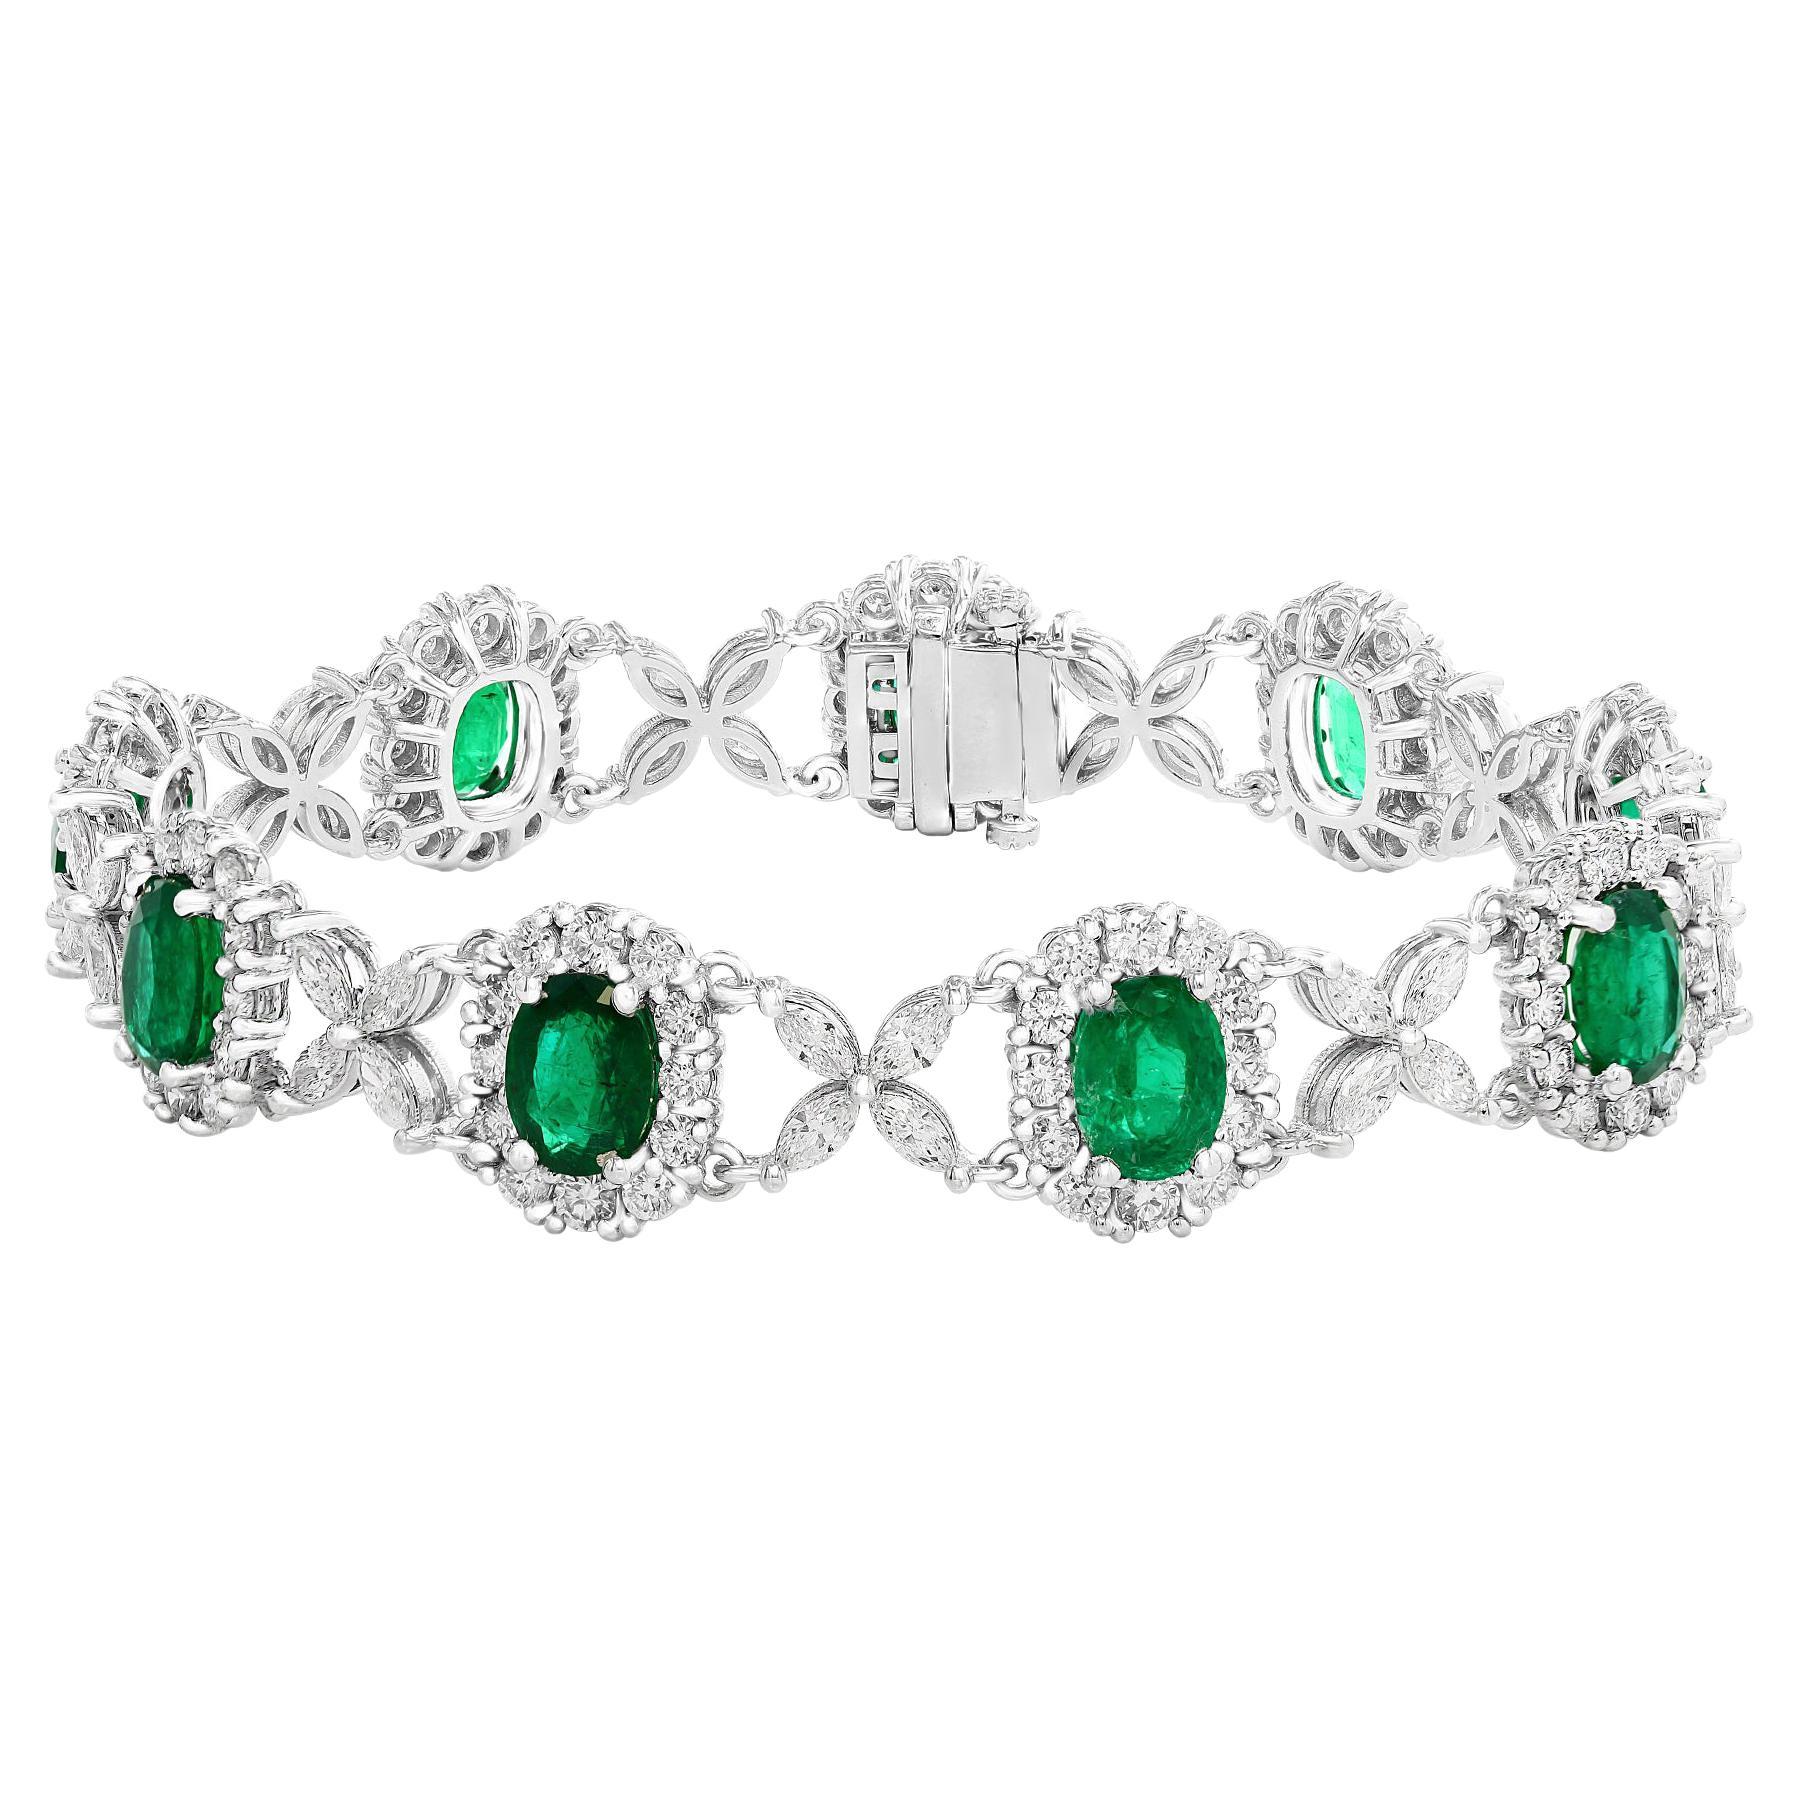 10.52 Carat Oval Cut Emerald and Diamond Tennis Bracelet in 14K White Gold